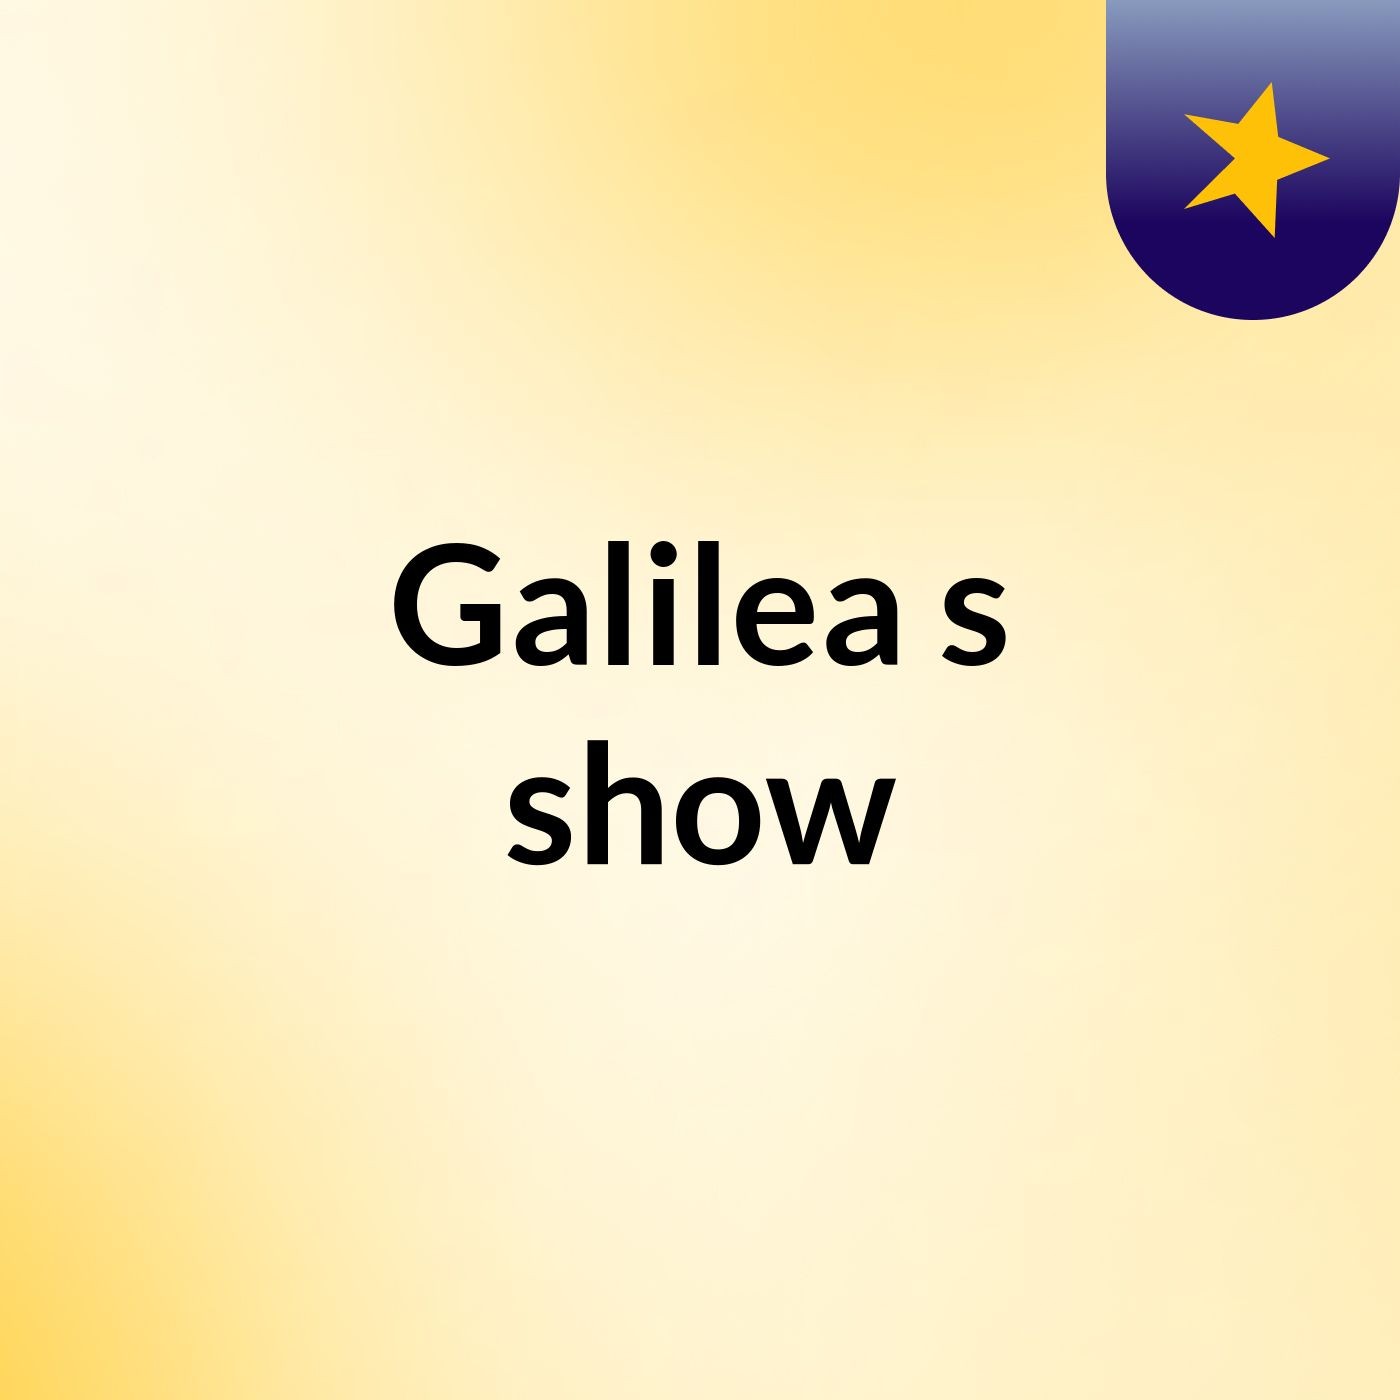 Galilea's show